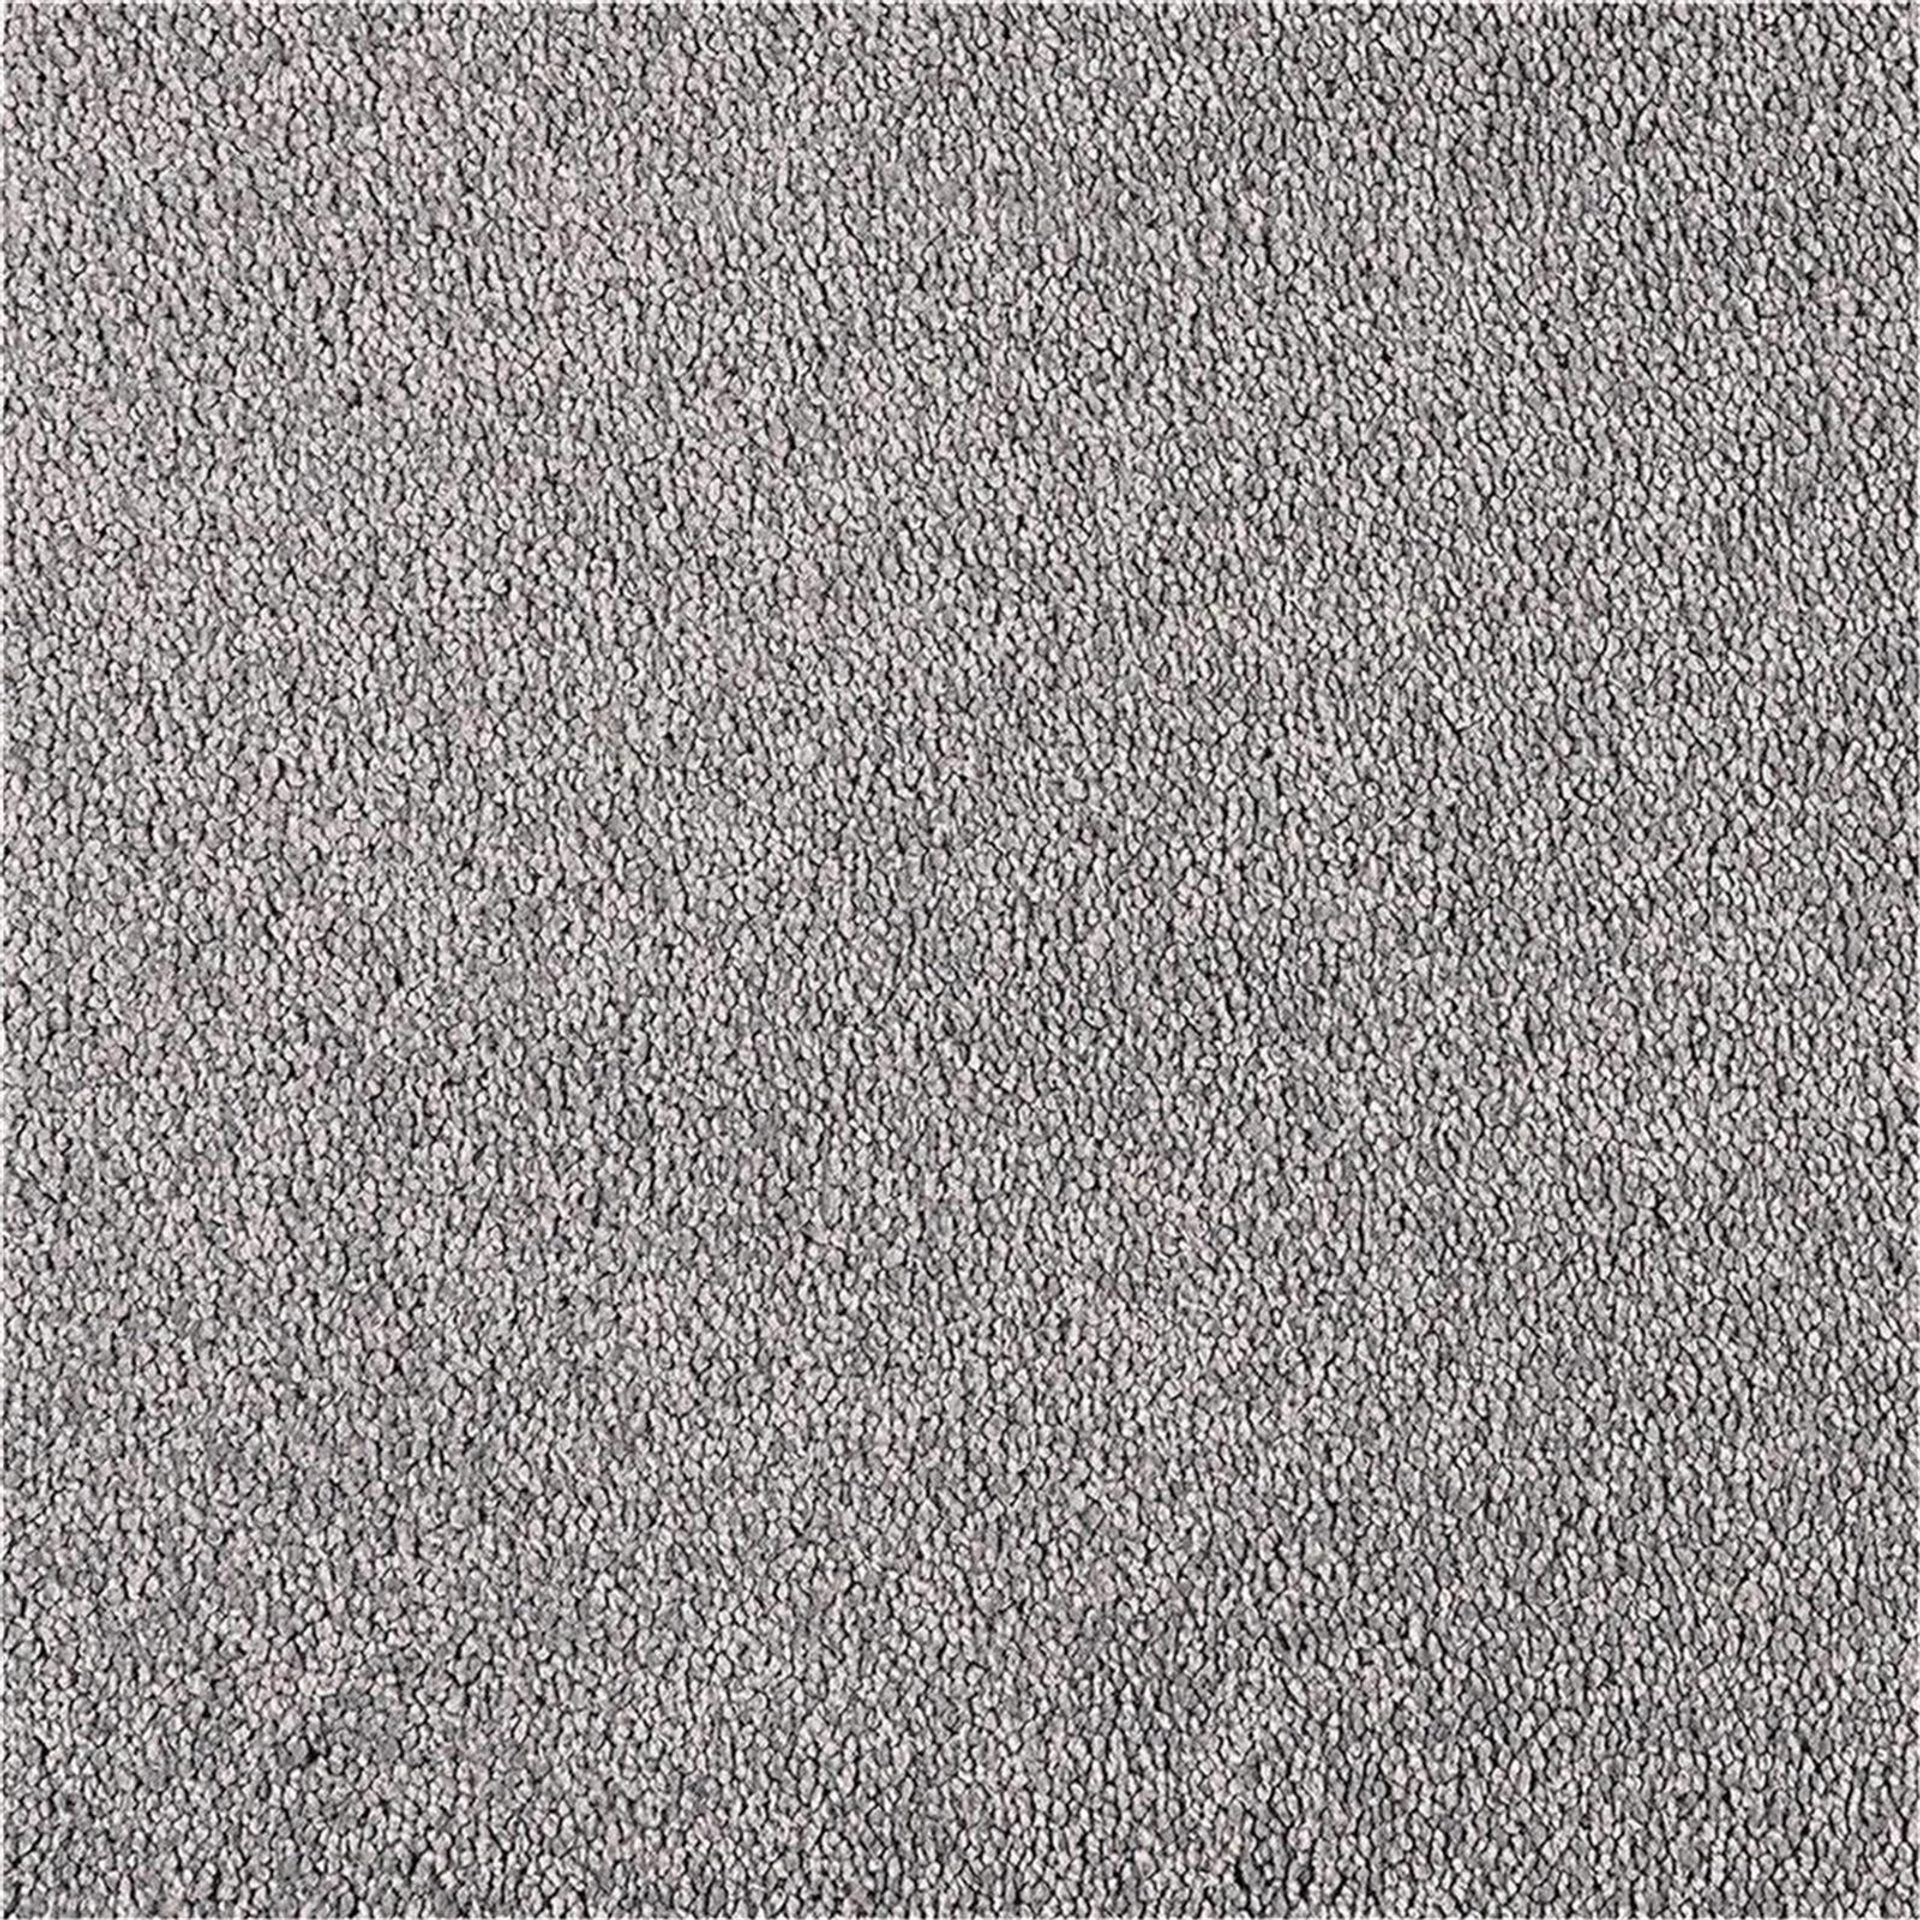 Teppichboden Infloor-Girloon Coco Shag/Langflor Grau 540 uni - Rollenbreite 200 cm